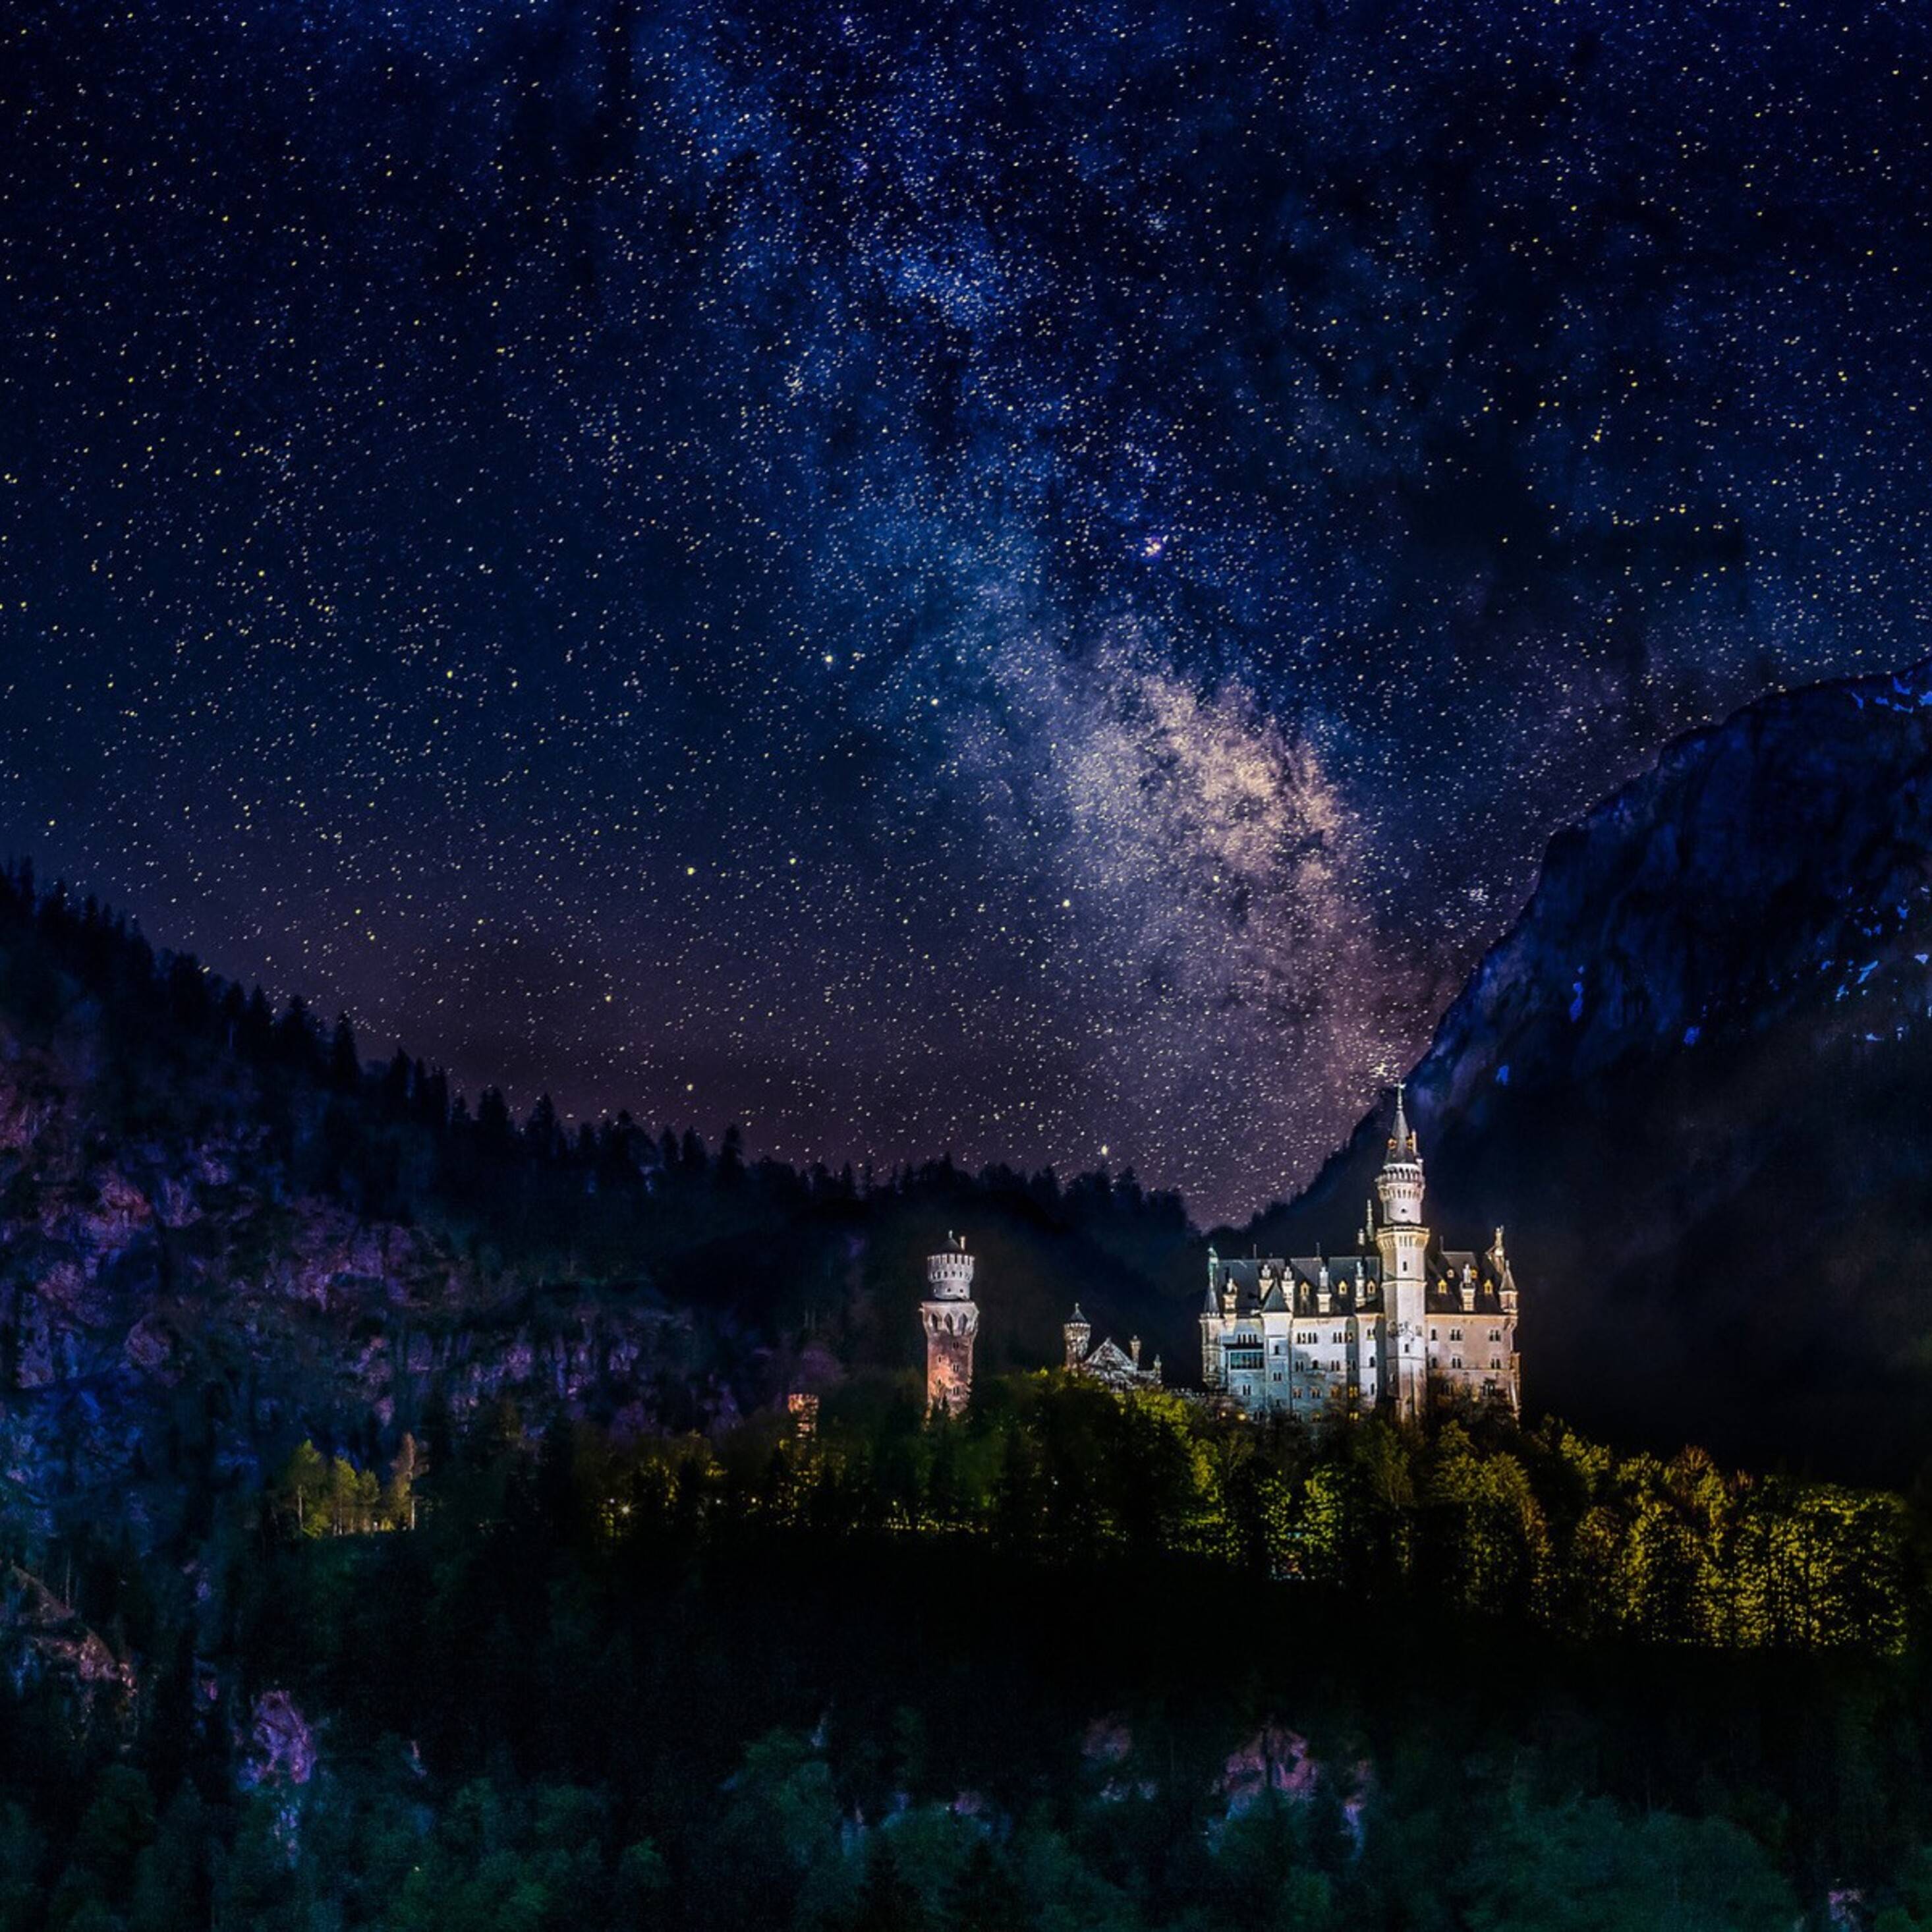 Neuschwanstein Castle iPad Pro Retina Display HD 4k Wallpaper, Image, Background, Photo and Picture